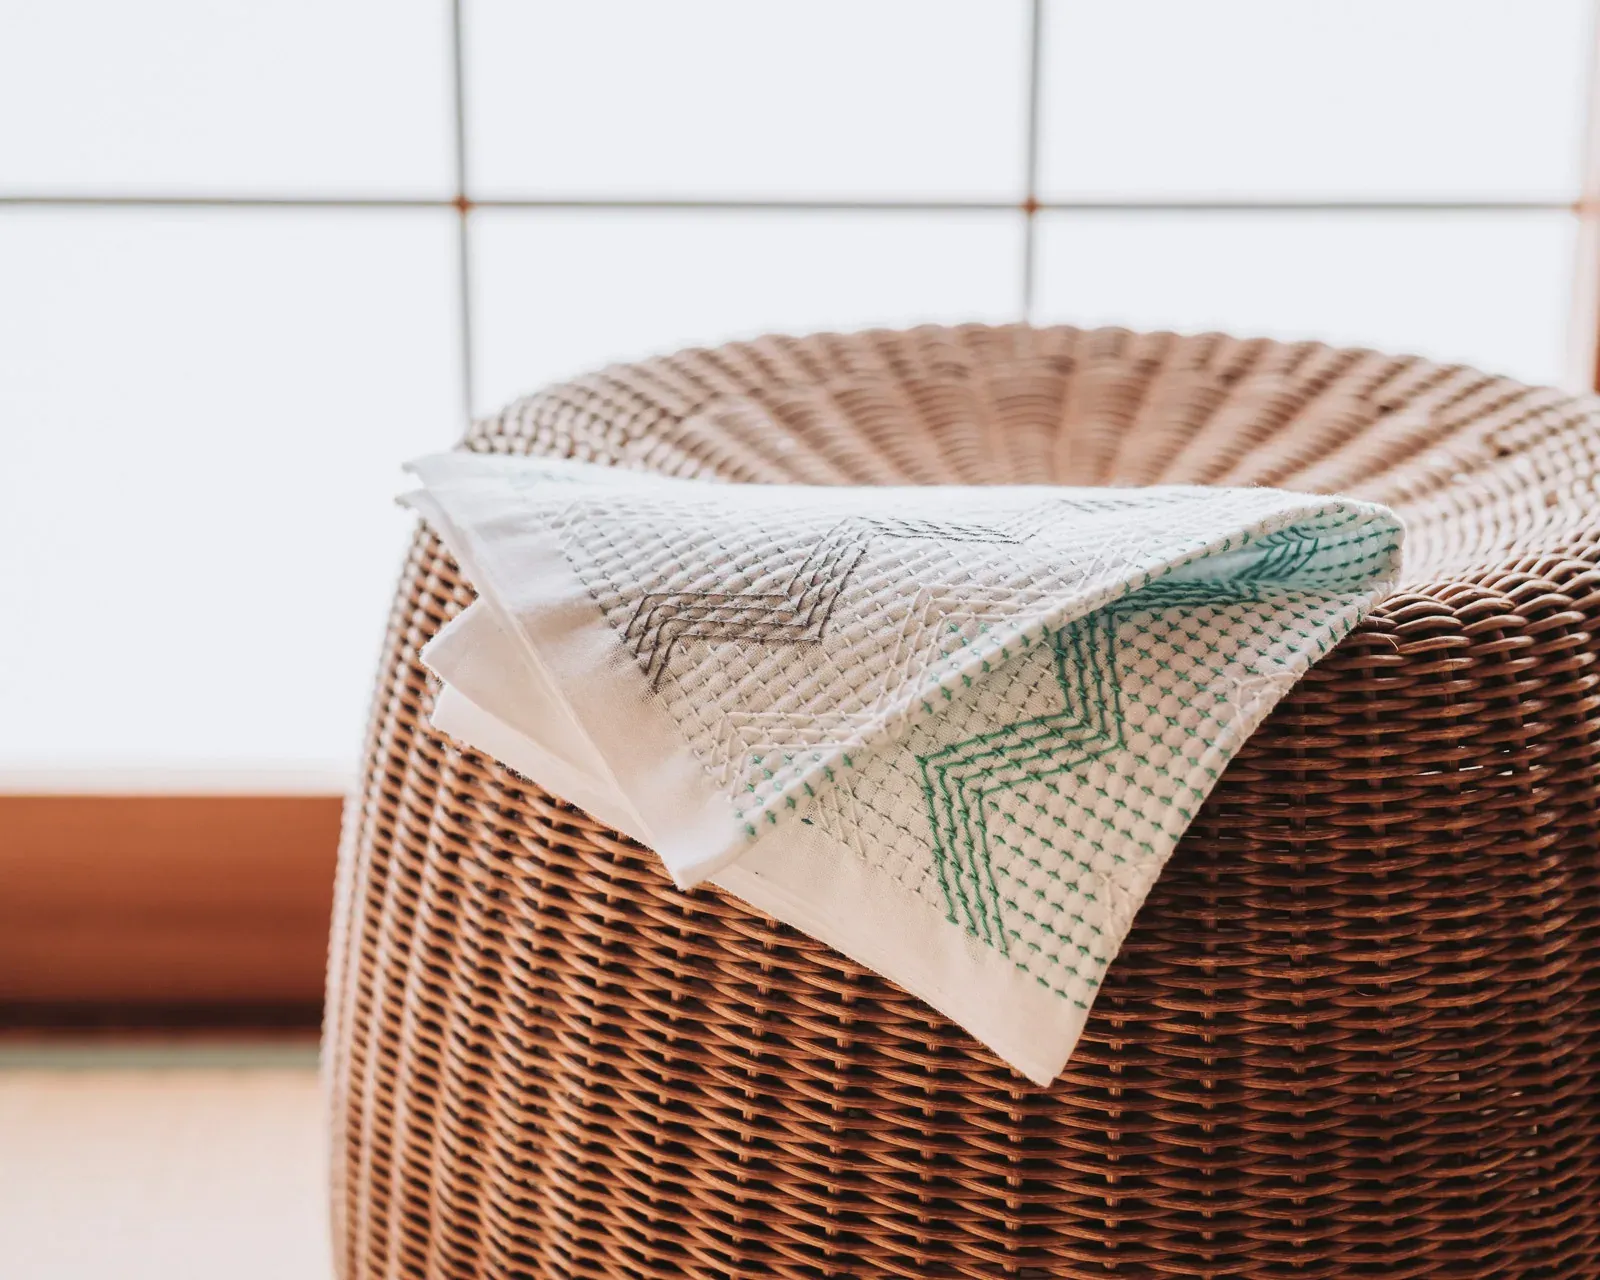 A sashiko dishcloth draped across a rattan stool.